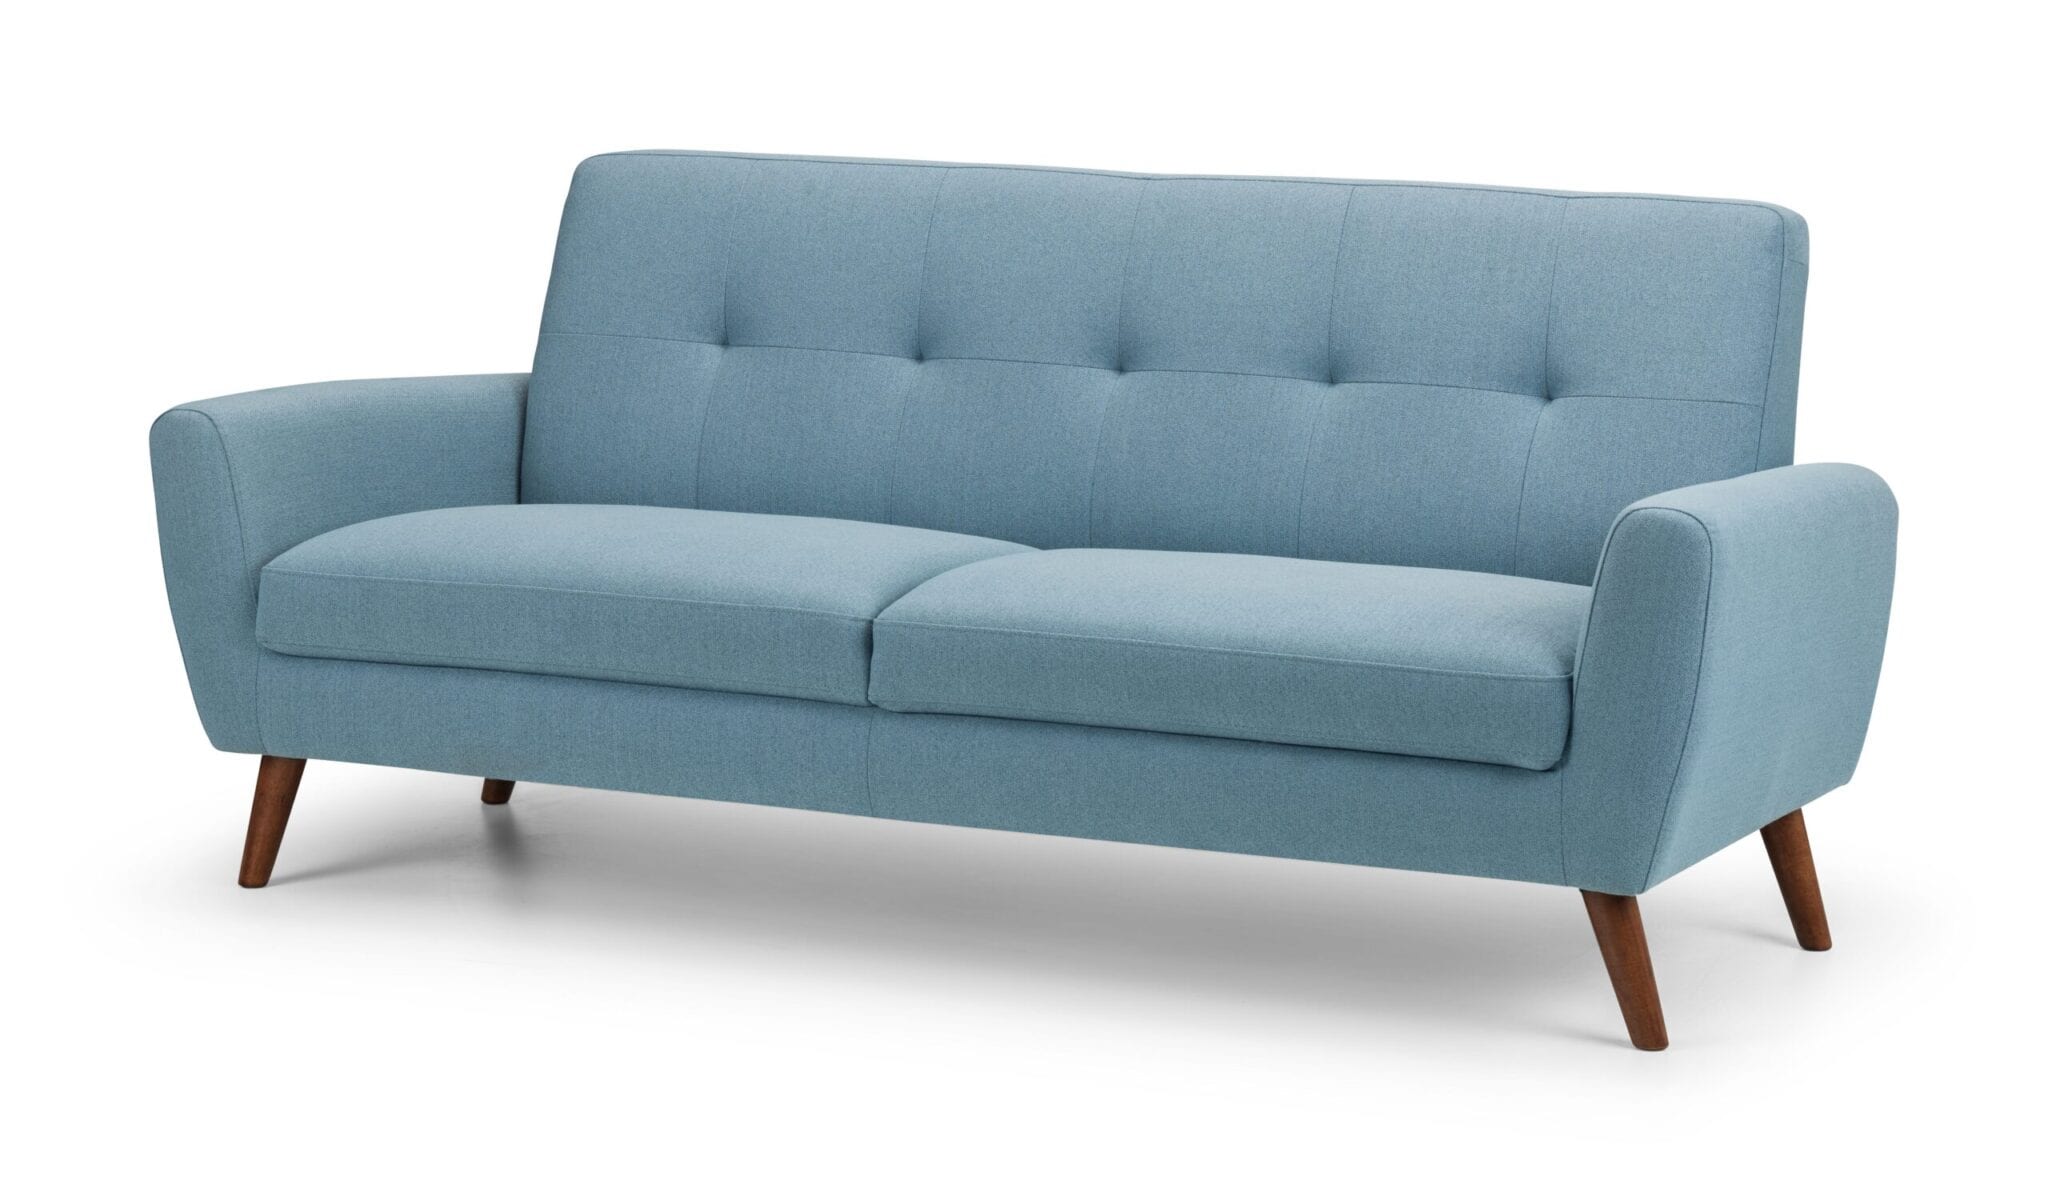 Honcho 3 Seater Compact Sofa - Blue